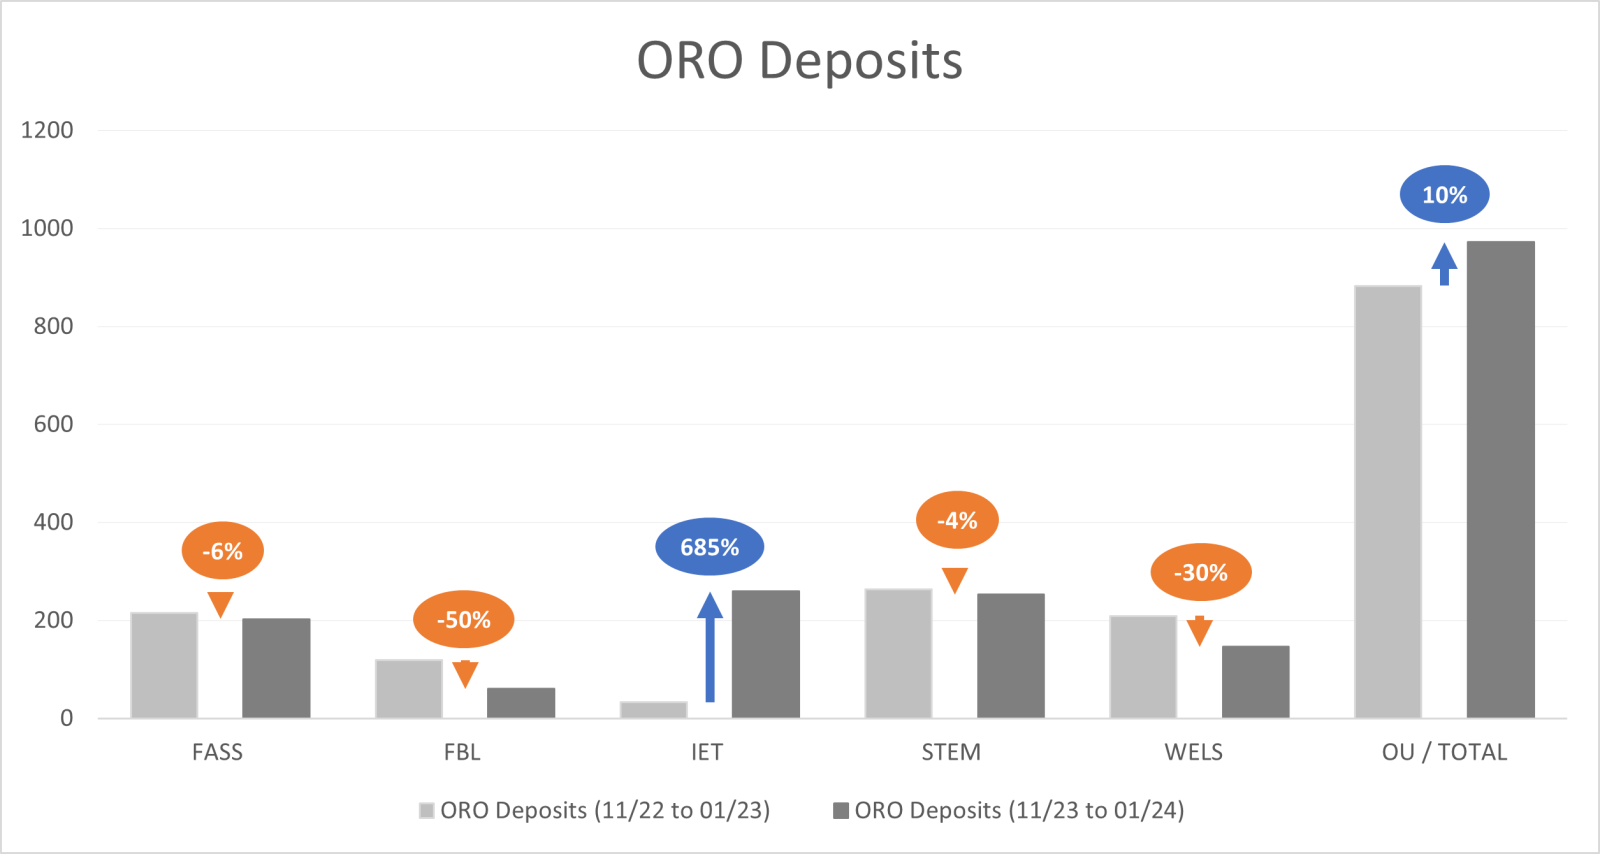 Bar chart depicting ORO deposits between November 2023 and January 2024